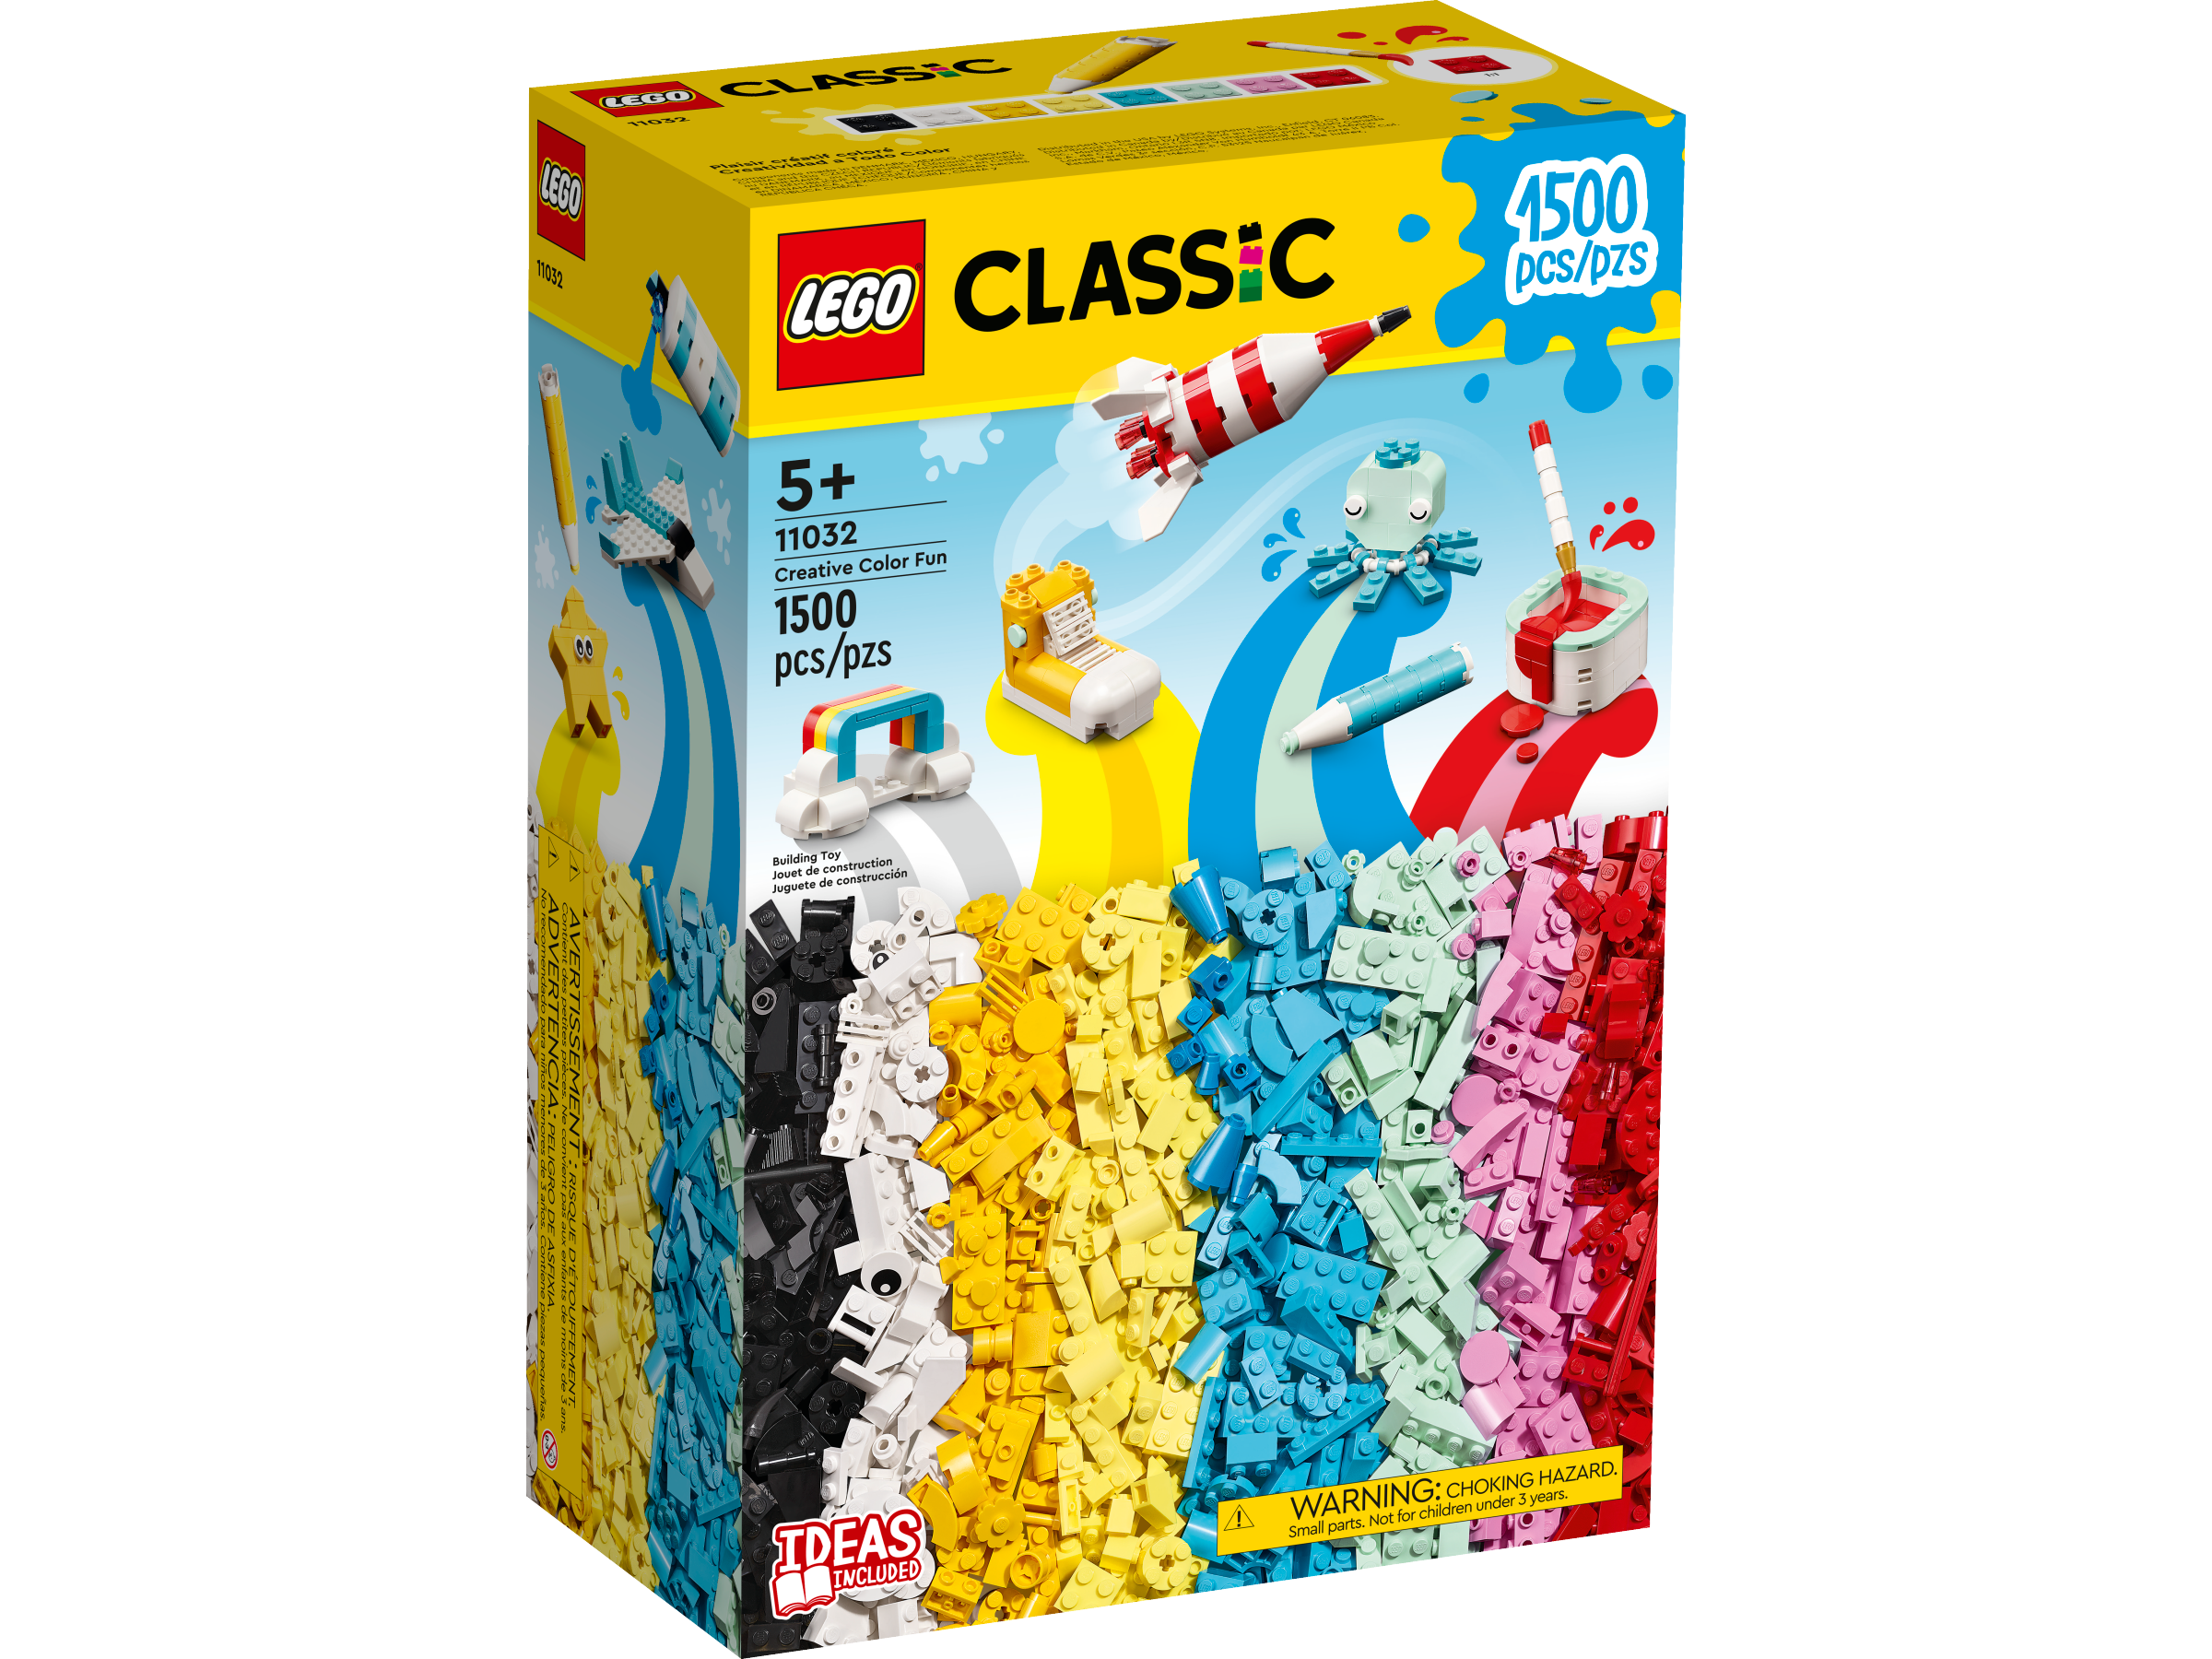 Kanon diamant Godkendelse LEGO® Classic Brick Sets | Official LEGO® Shop US